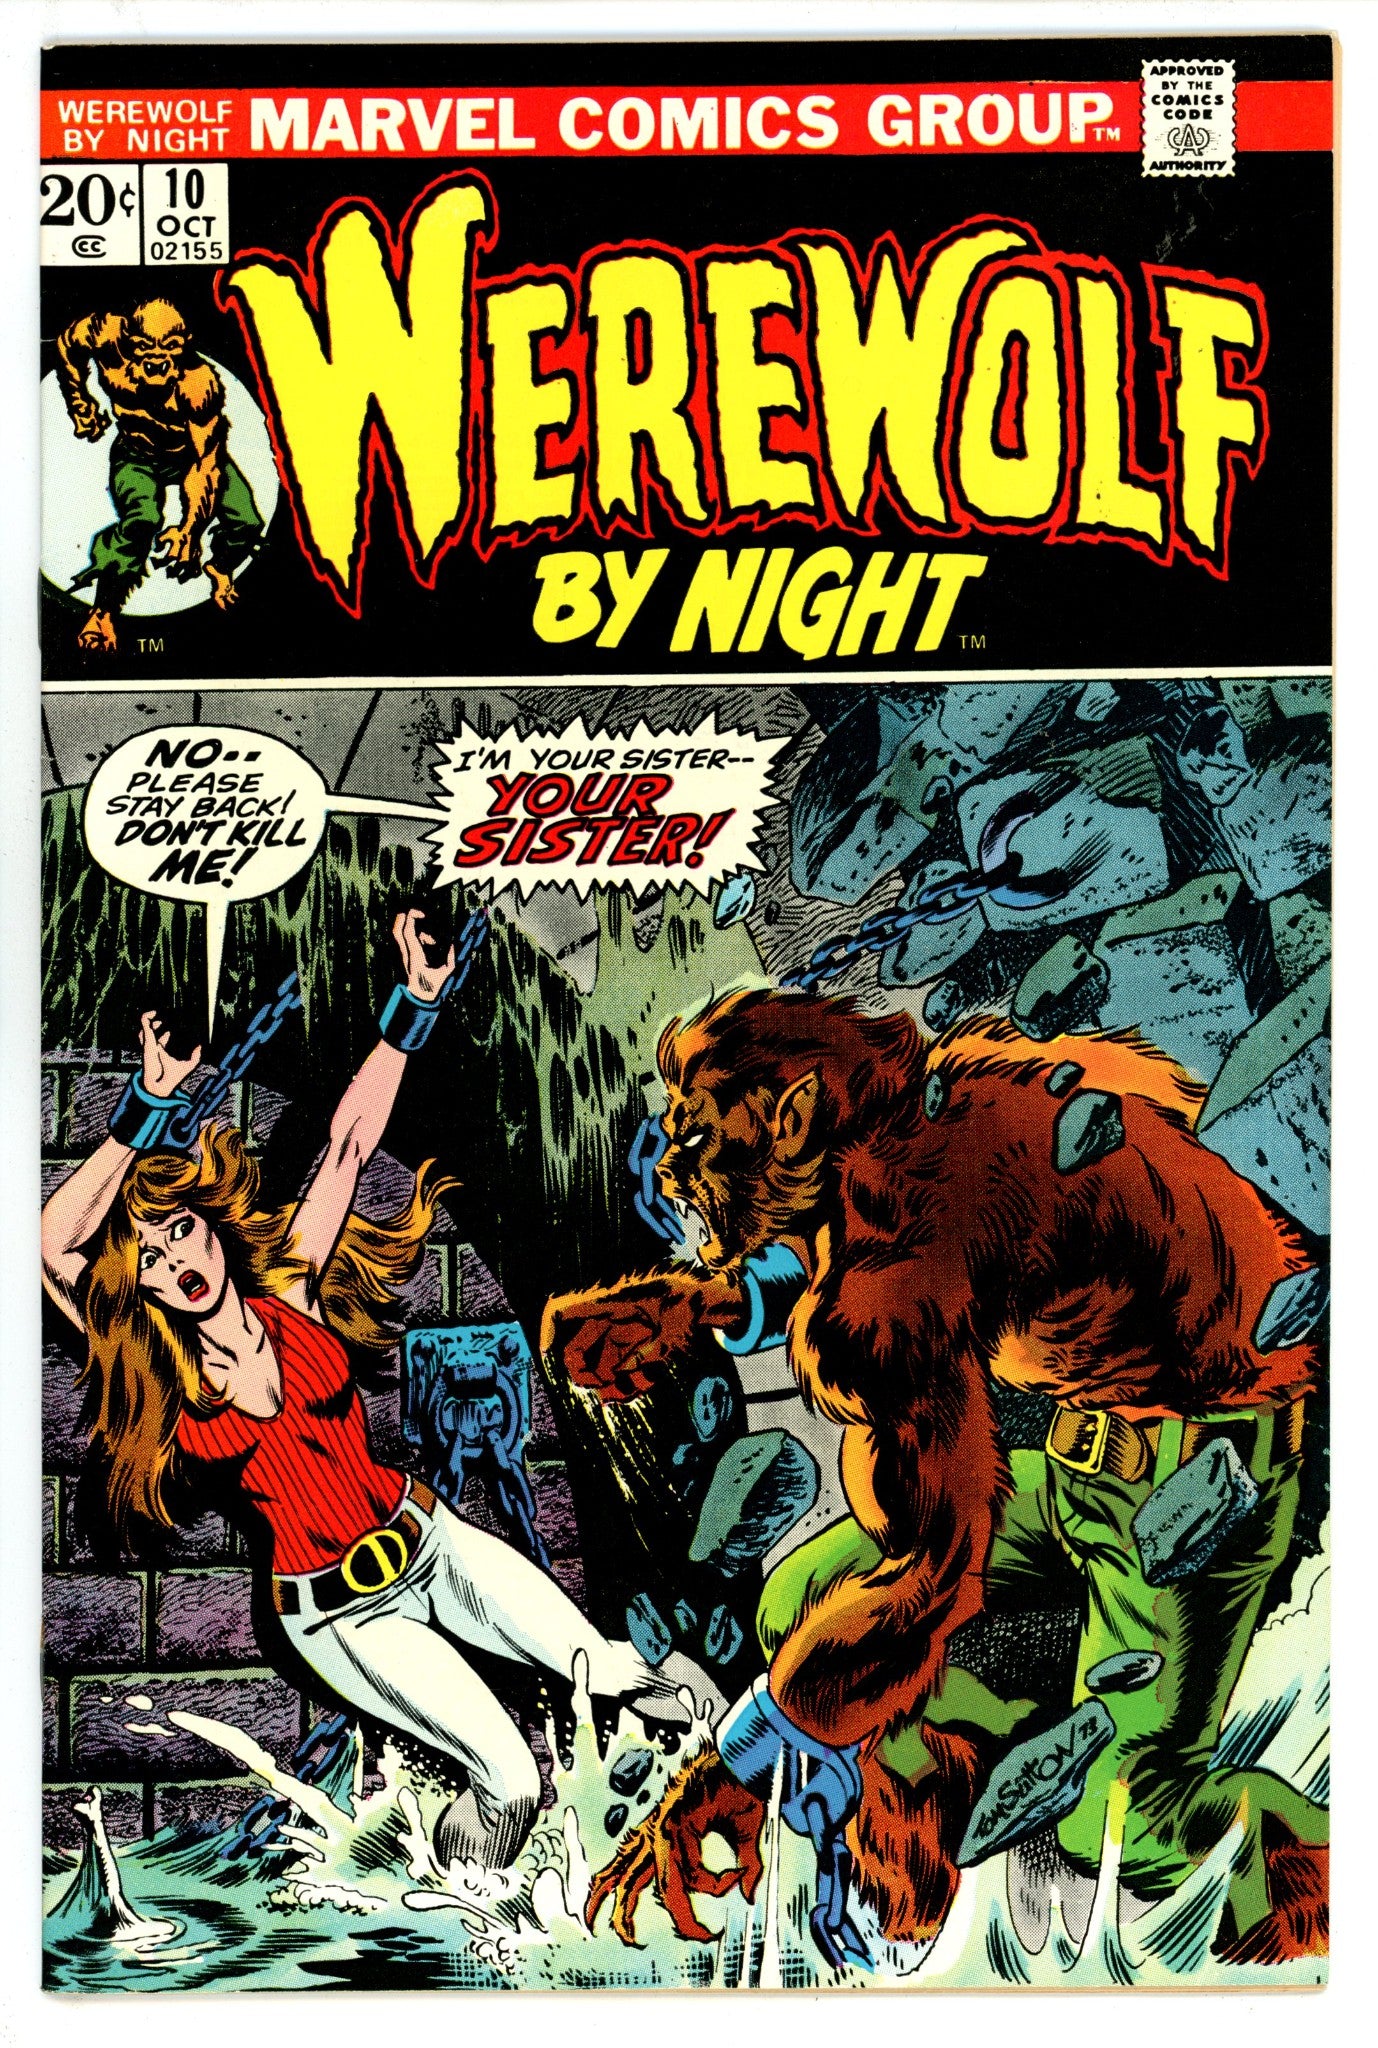 Werewolf by Night Vol 1 10 VG+ (4.5) (1973) 